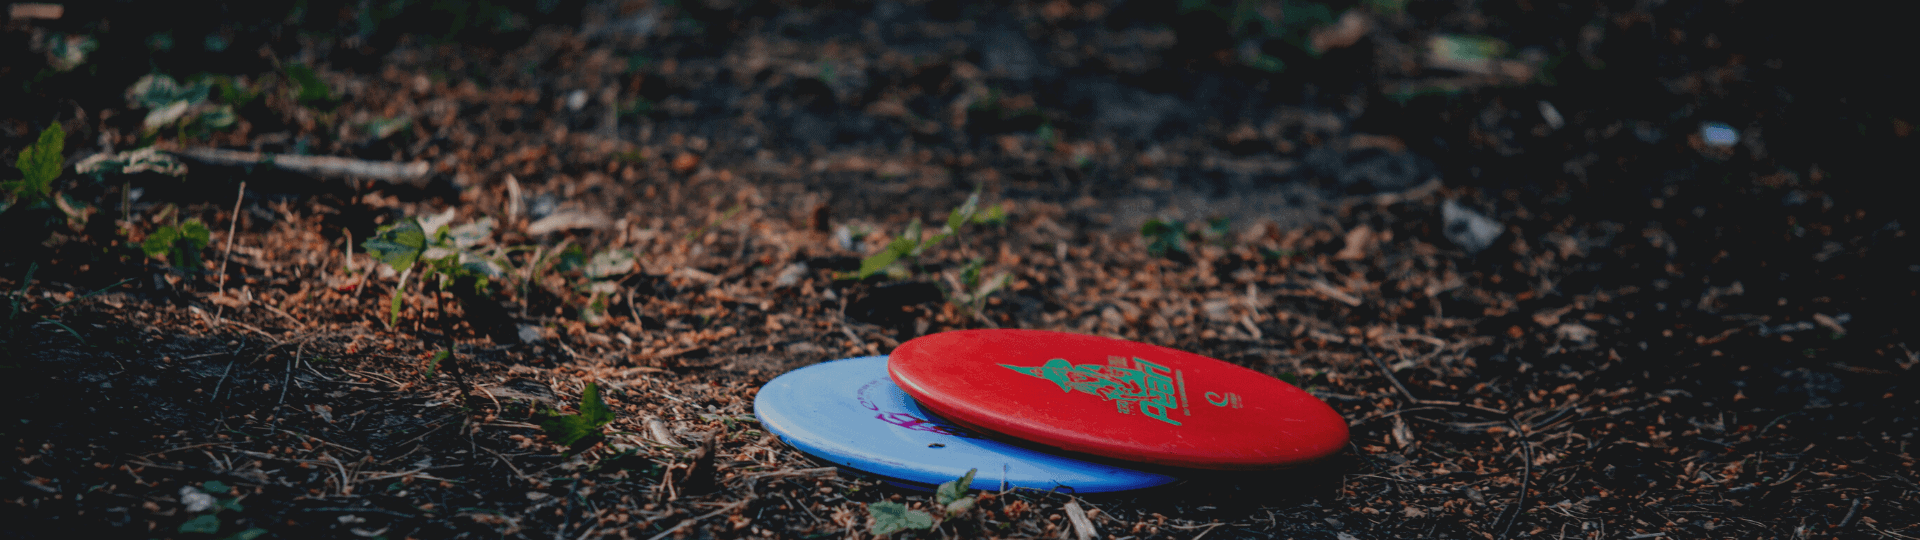 disku golfa diski mežā uz zemes